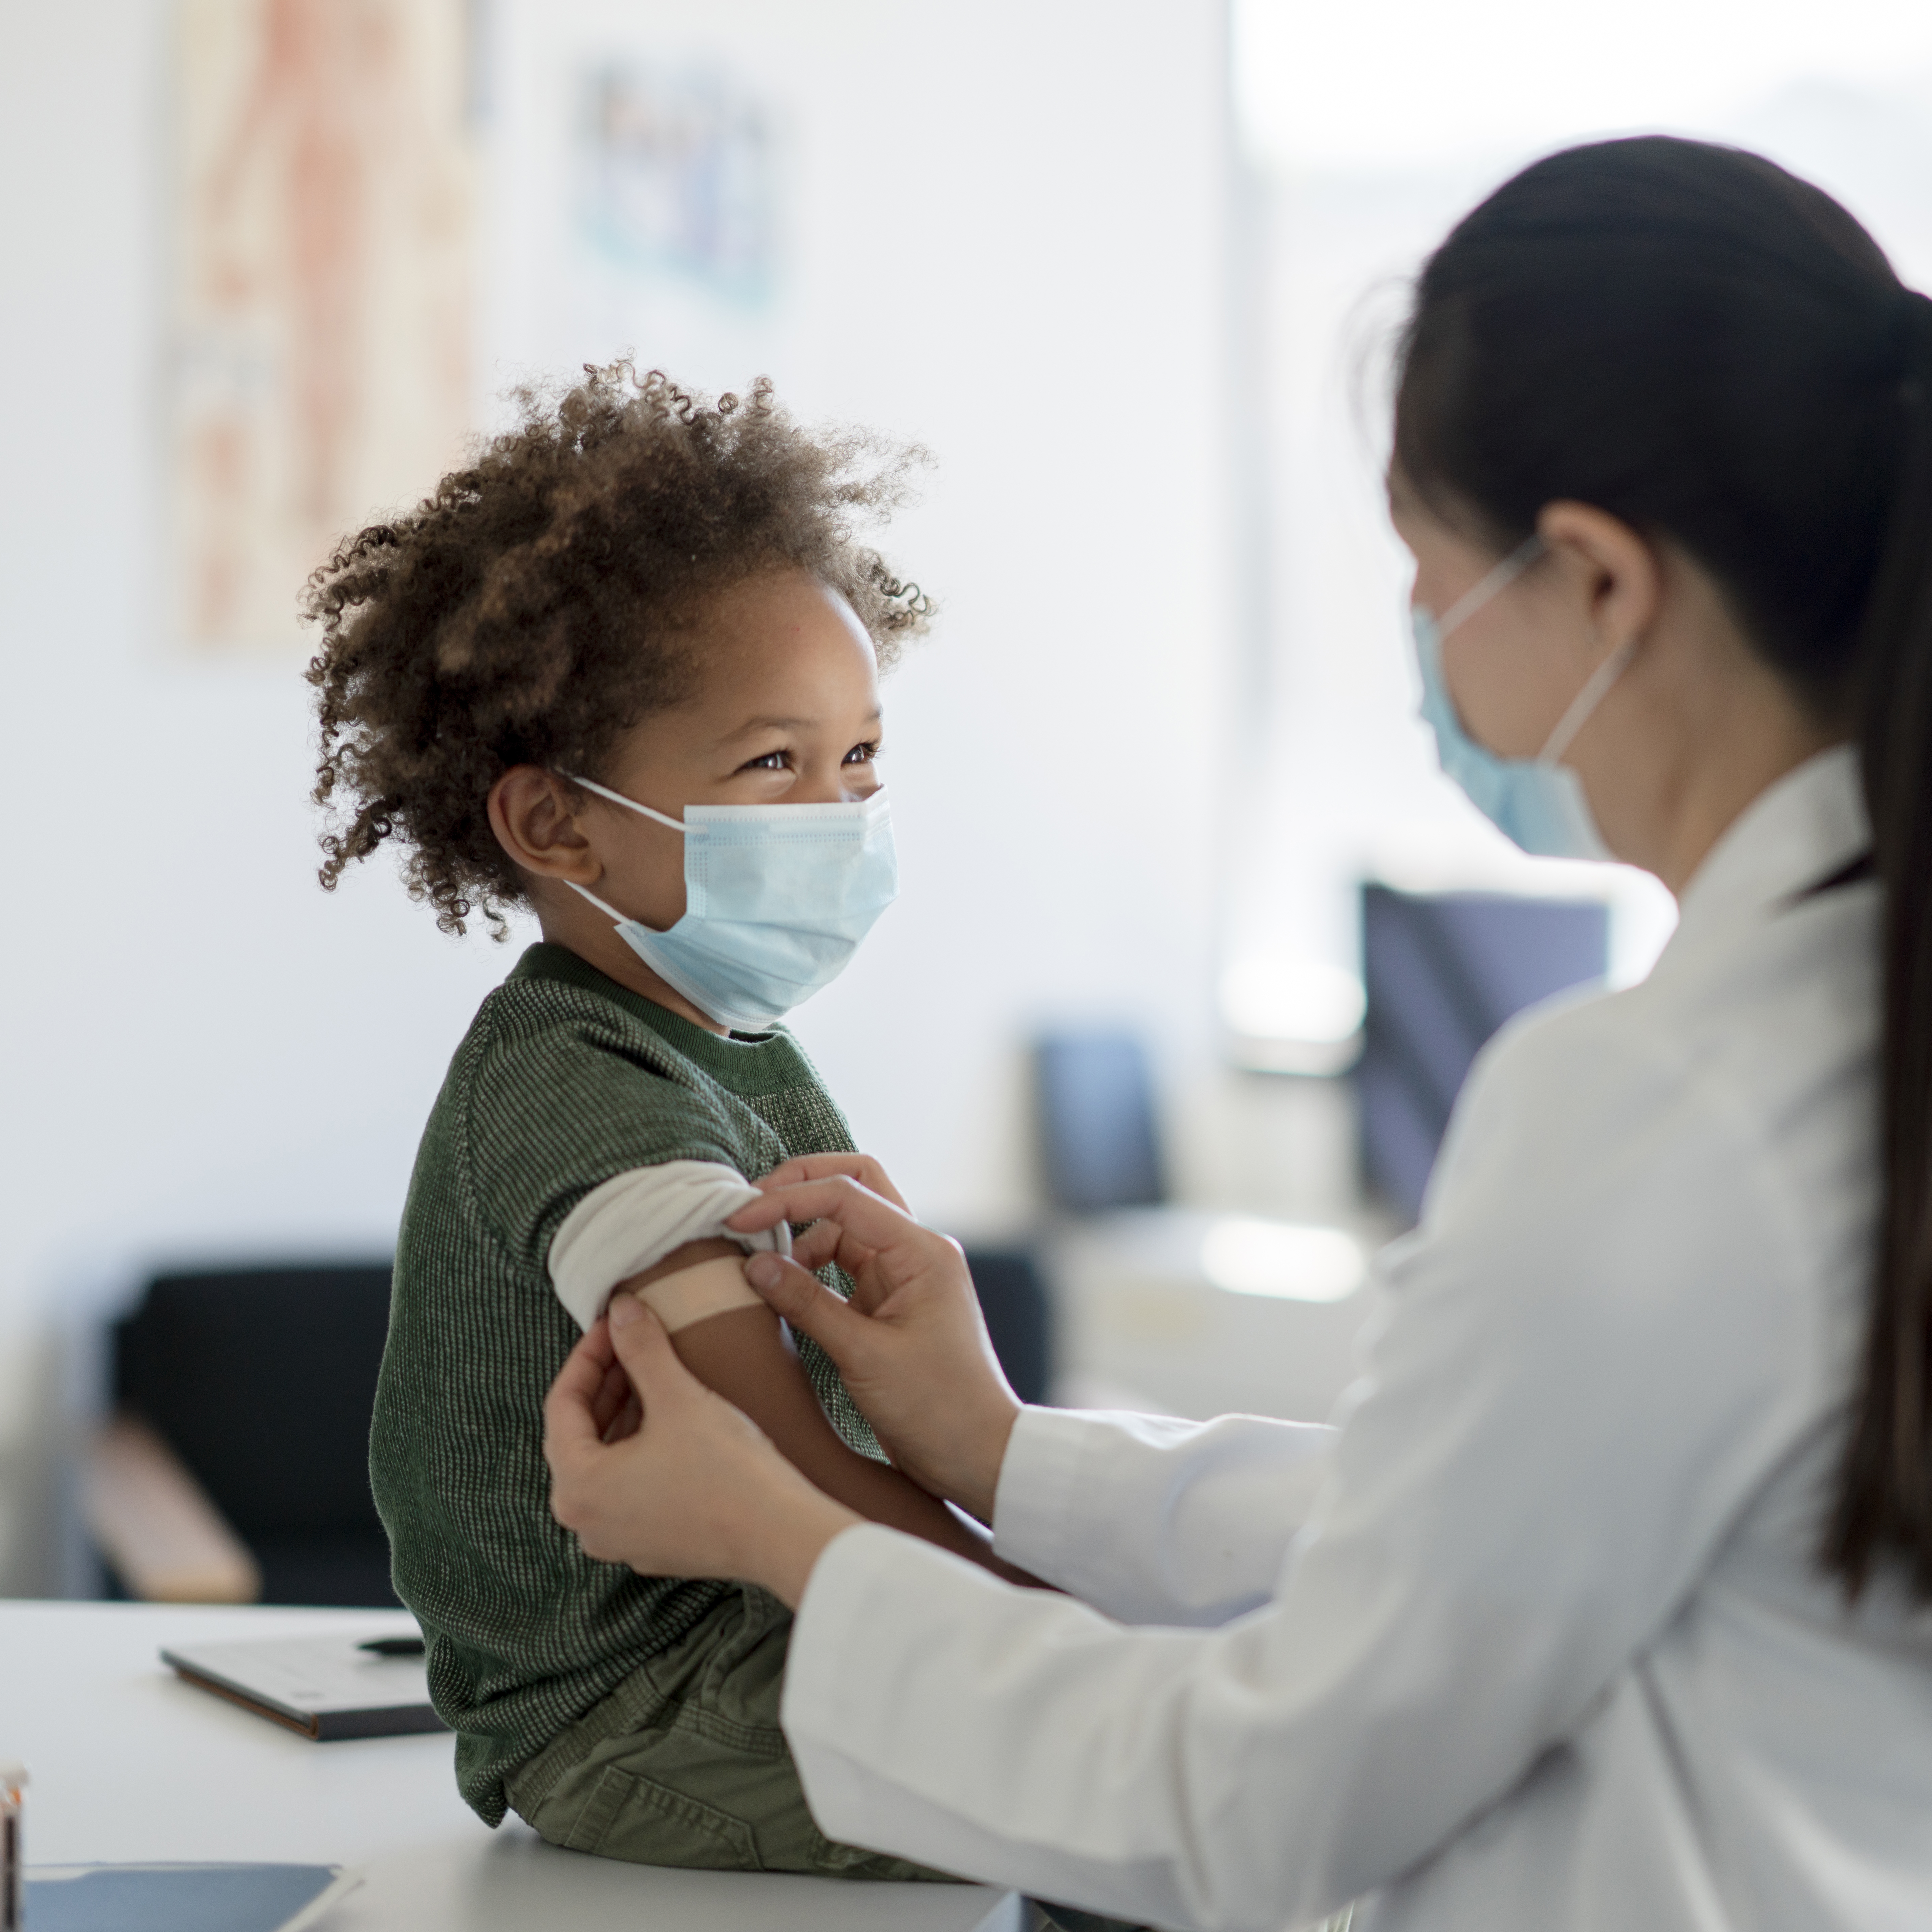 Boy receives a vaccination from a nurse